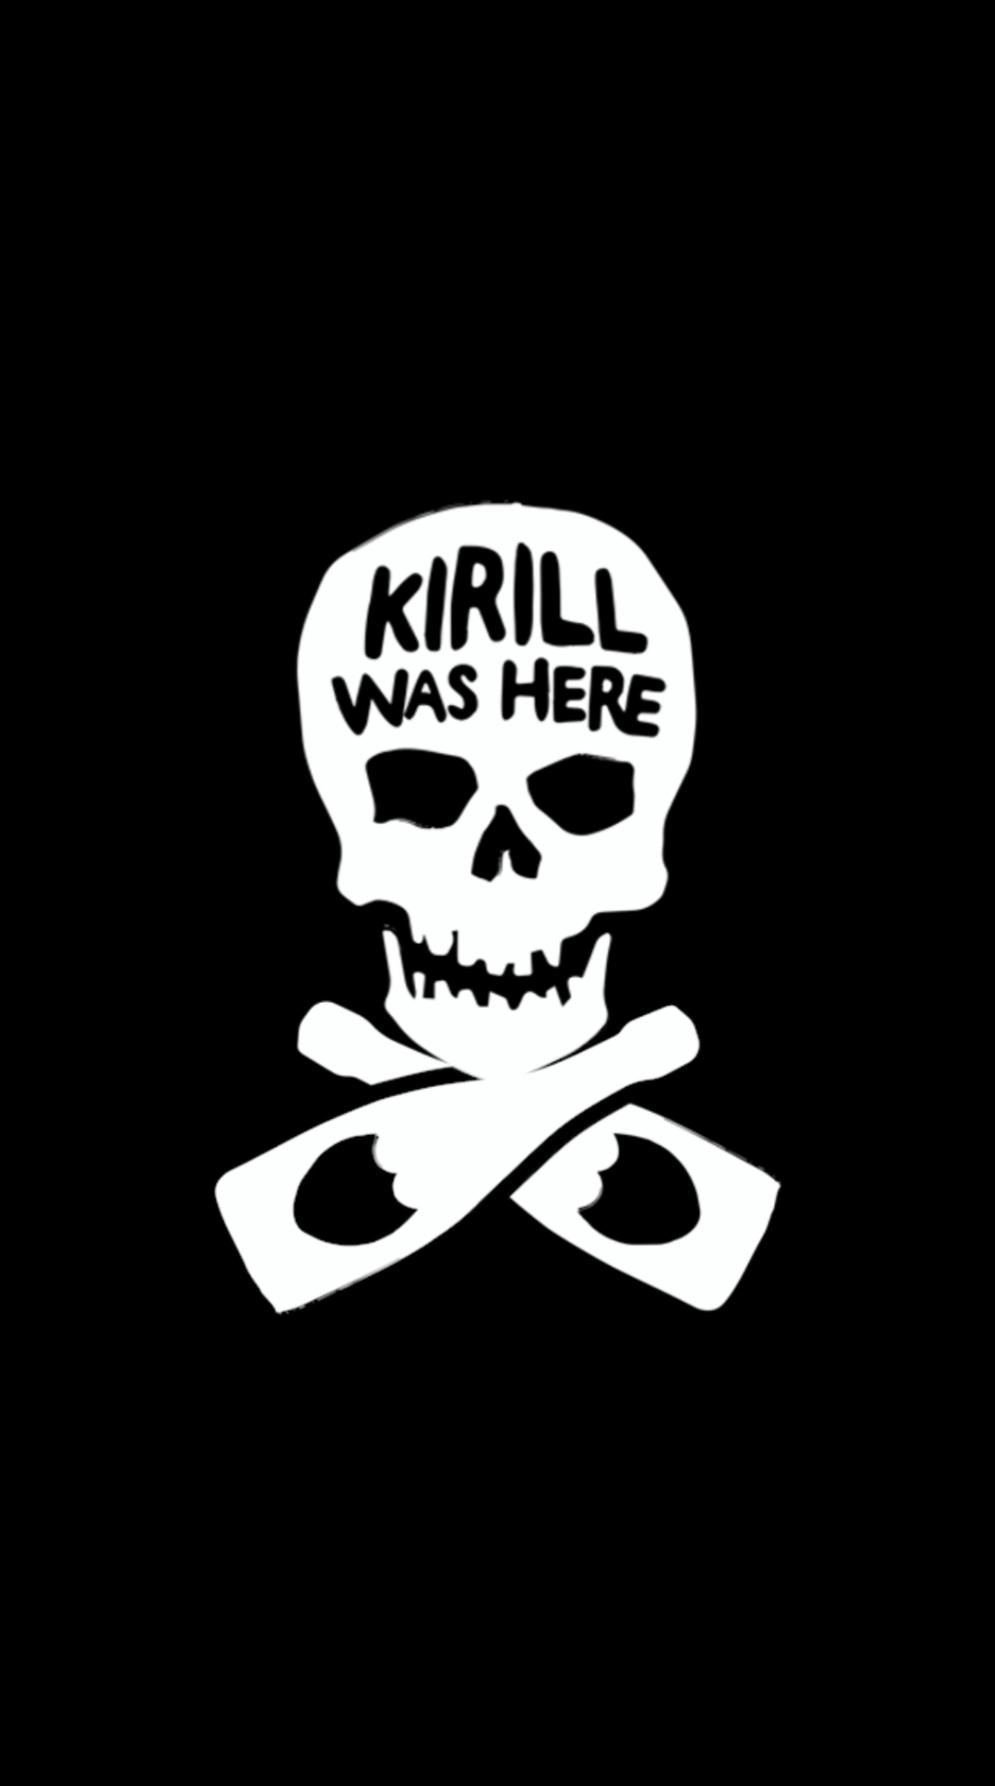 Kirill was here.com